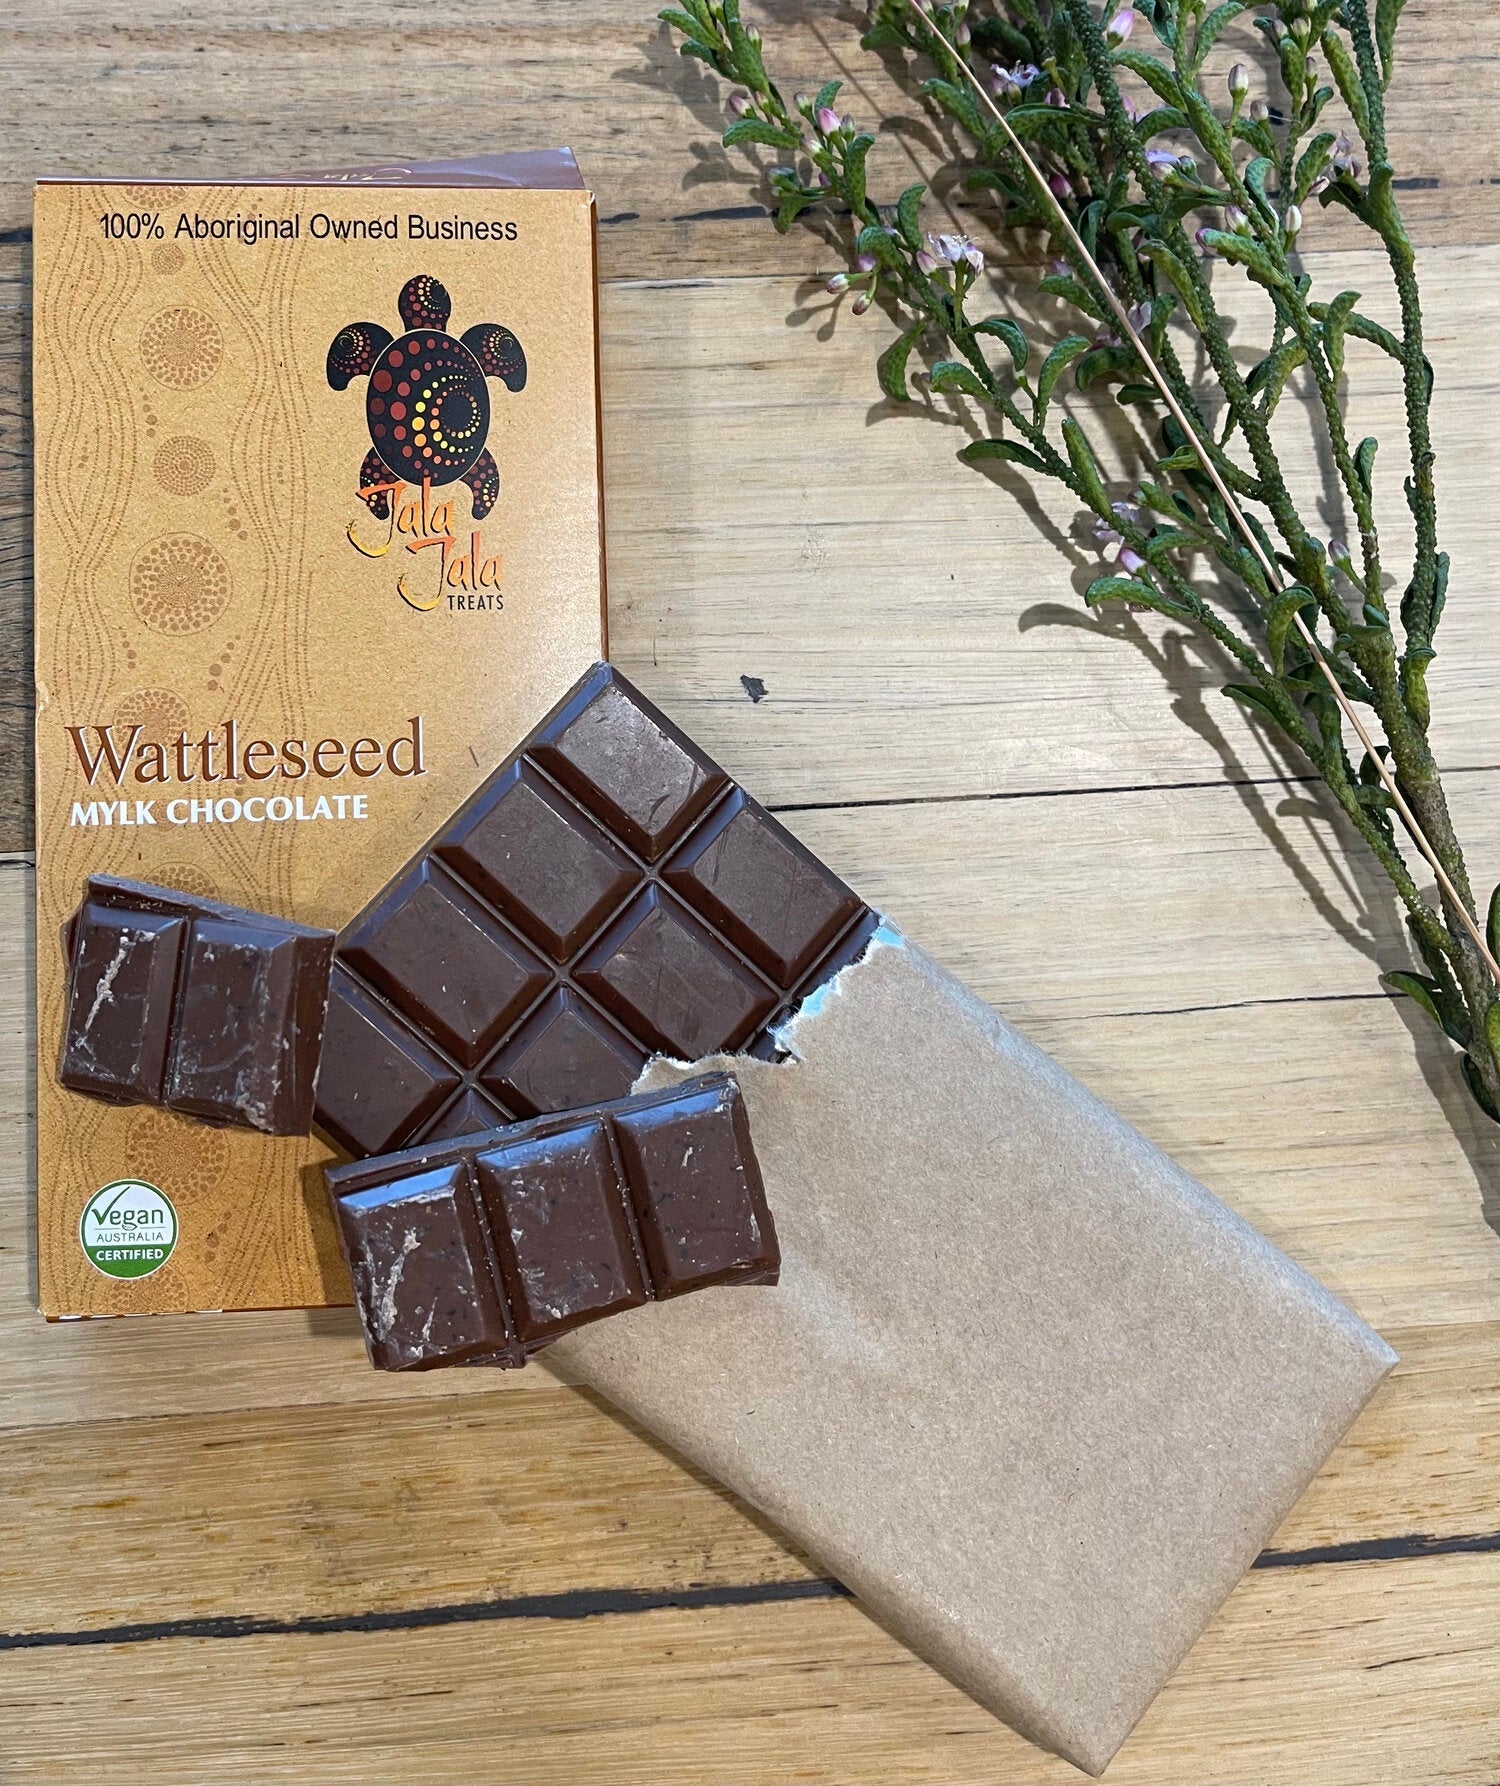 Wattleseed Milk Chocolate by Jala Jala